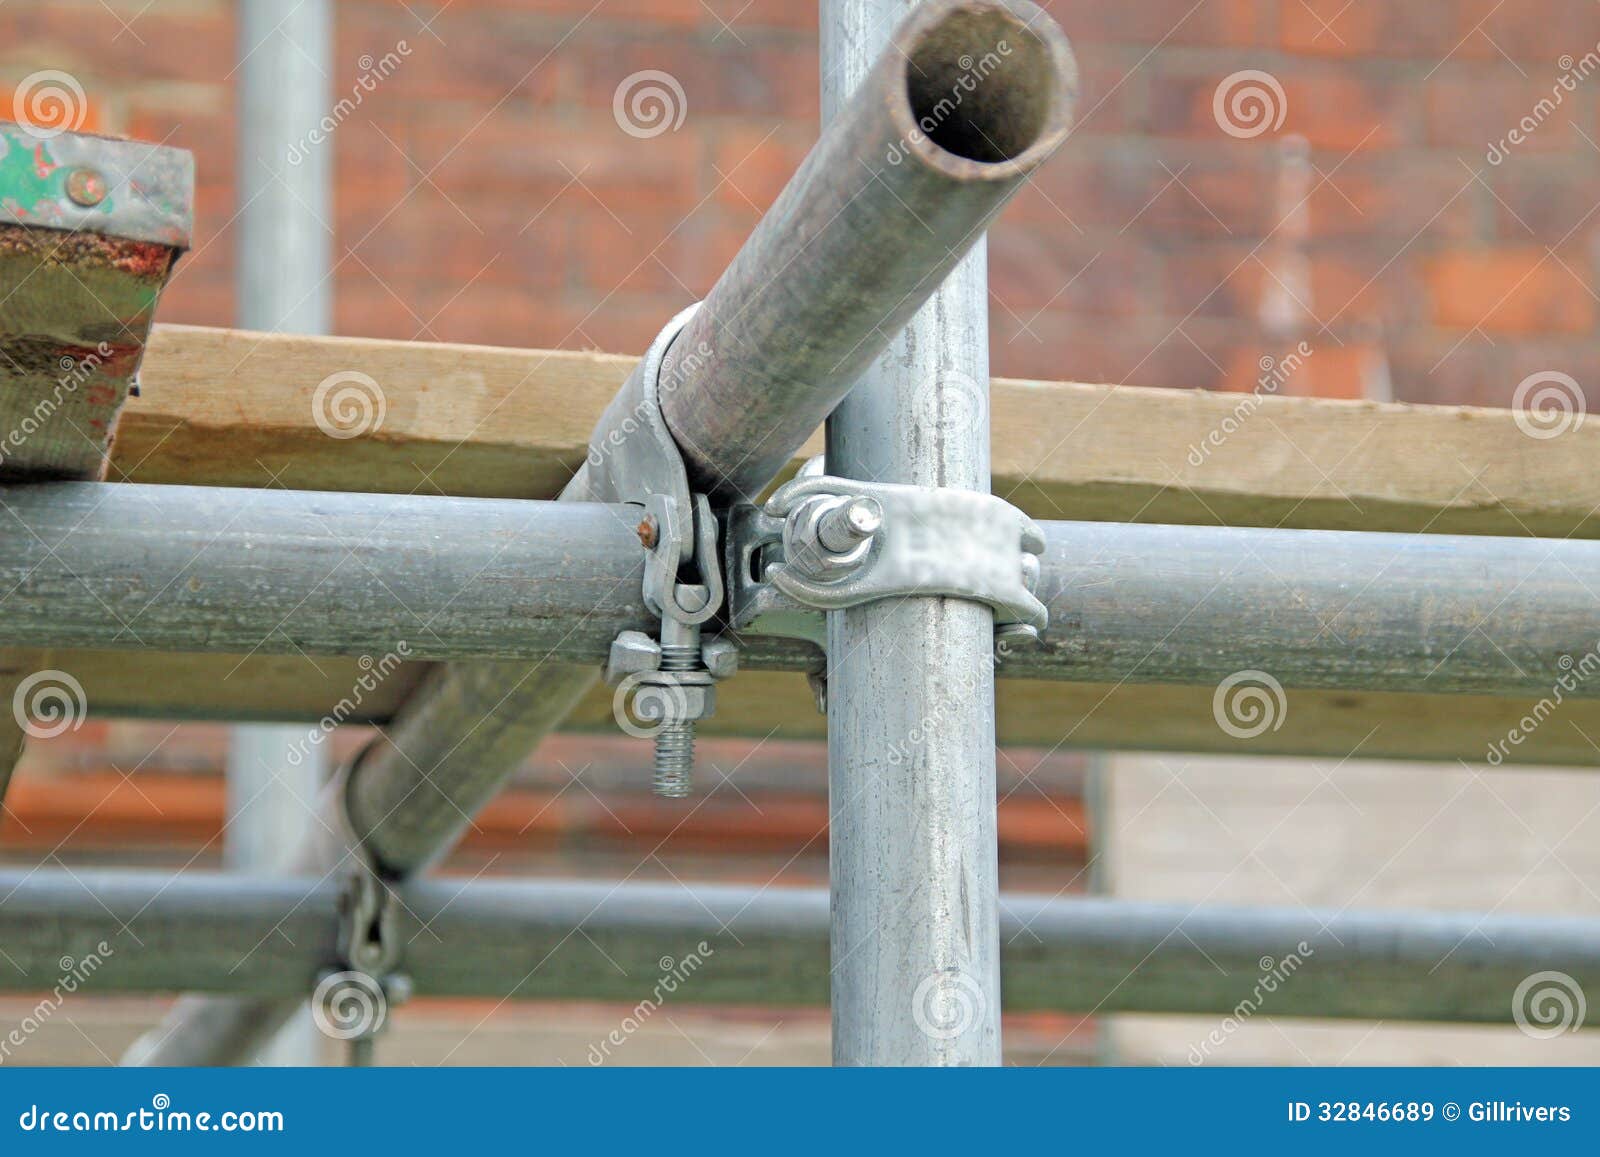 secured scaffolding